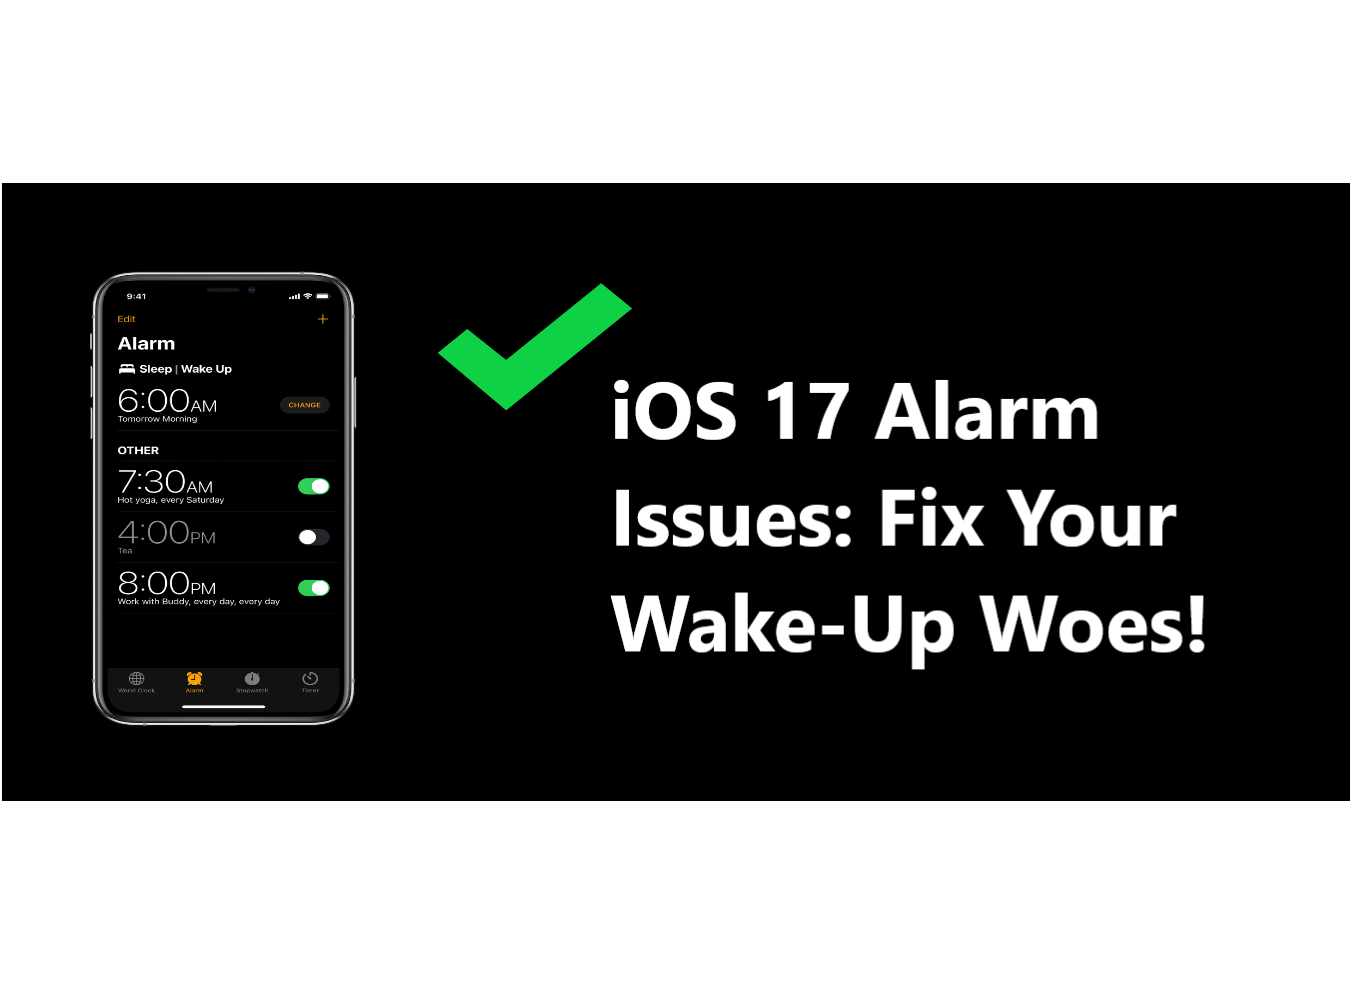 iOS 17 Alarm Issues